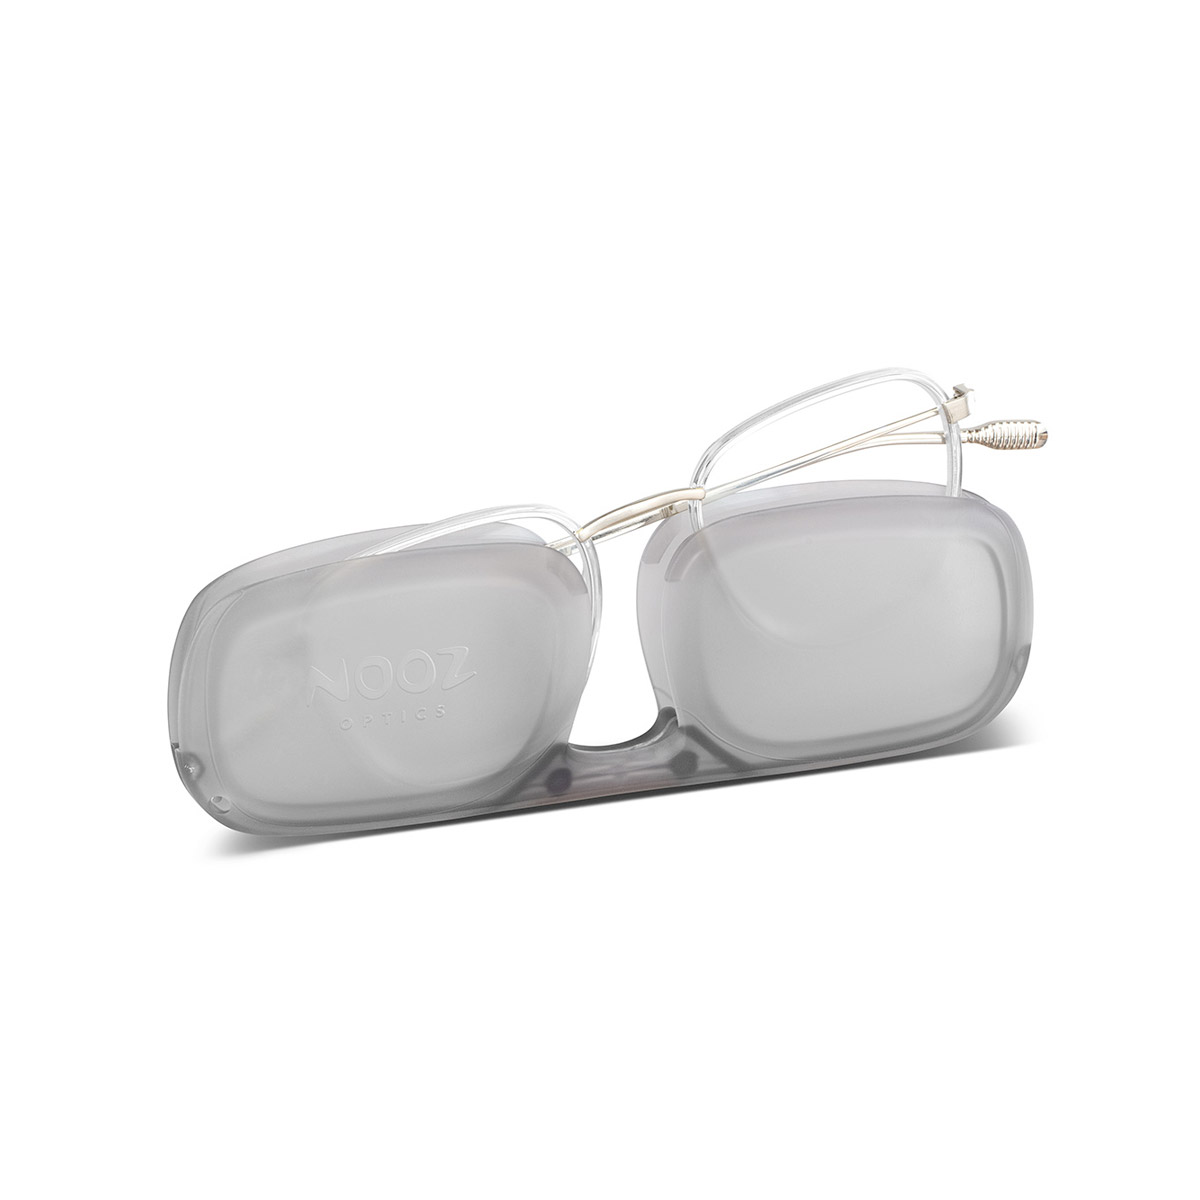 Dual Hiro Crystal Silver Blue Anti-Light Glasses